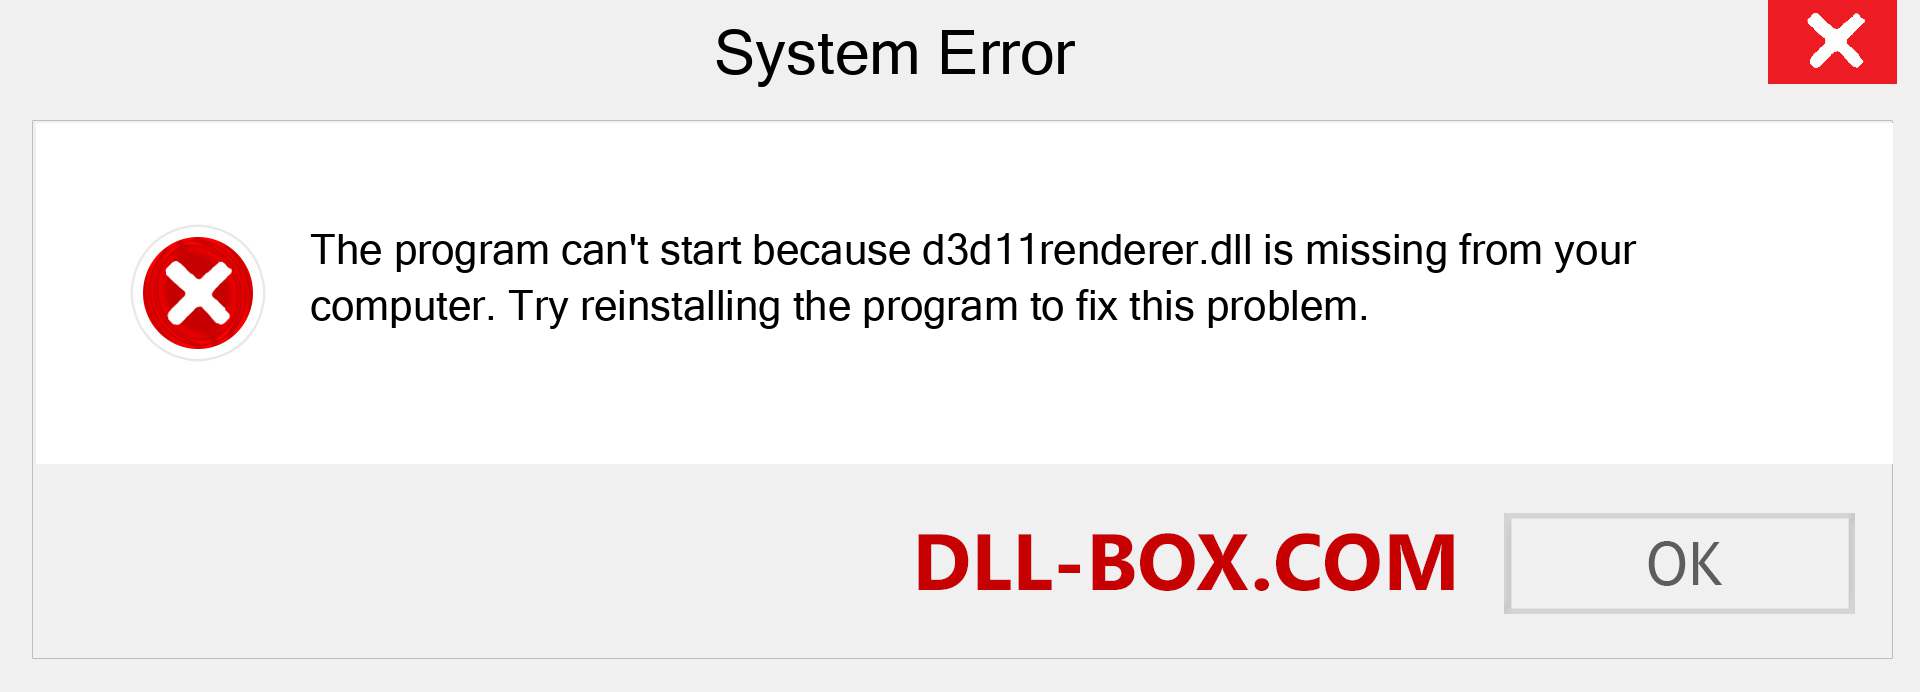  d3d11renderer.dll file is missing?. Download for Windows 7, 8, 10 - Fix  d3d11renderer dll Missing Error on Windows, photos, images